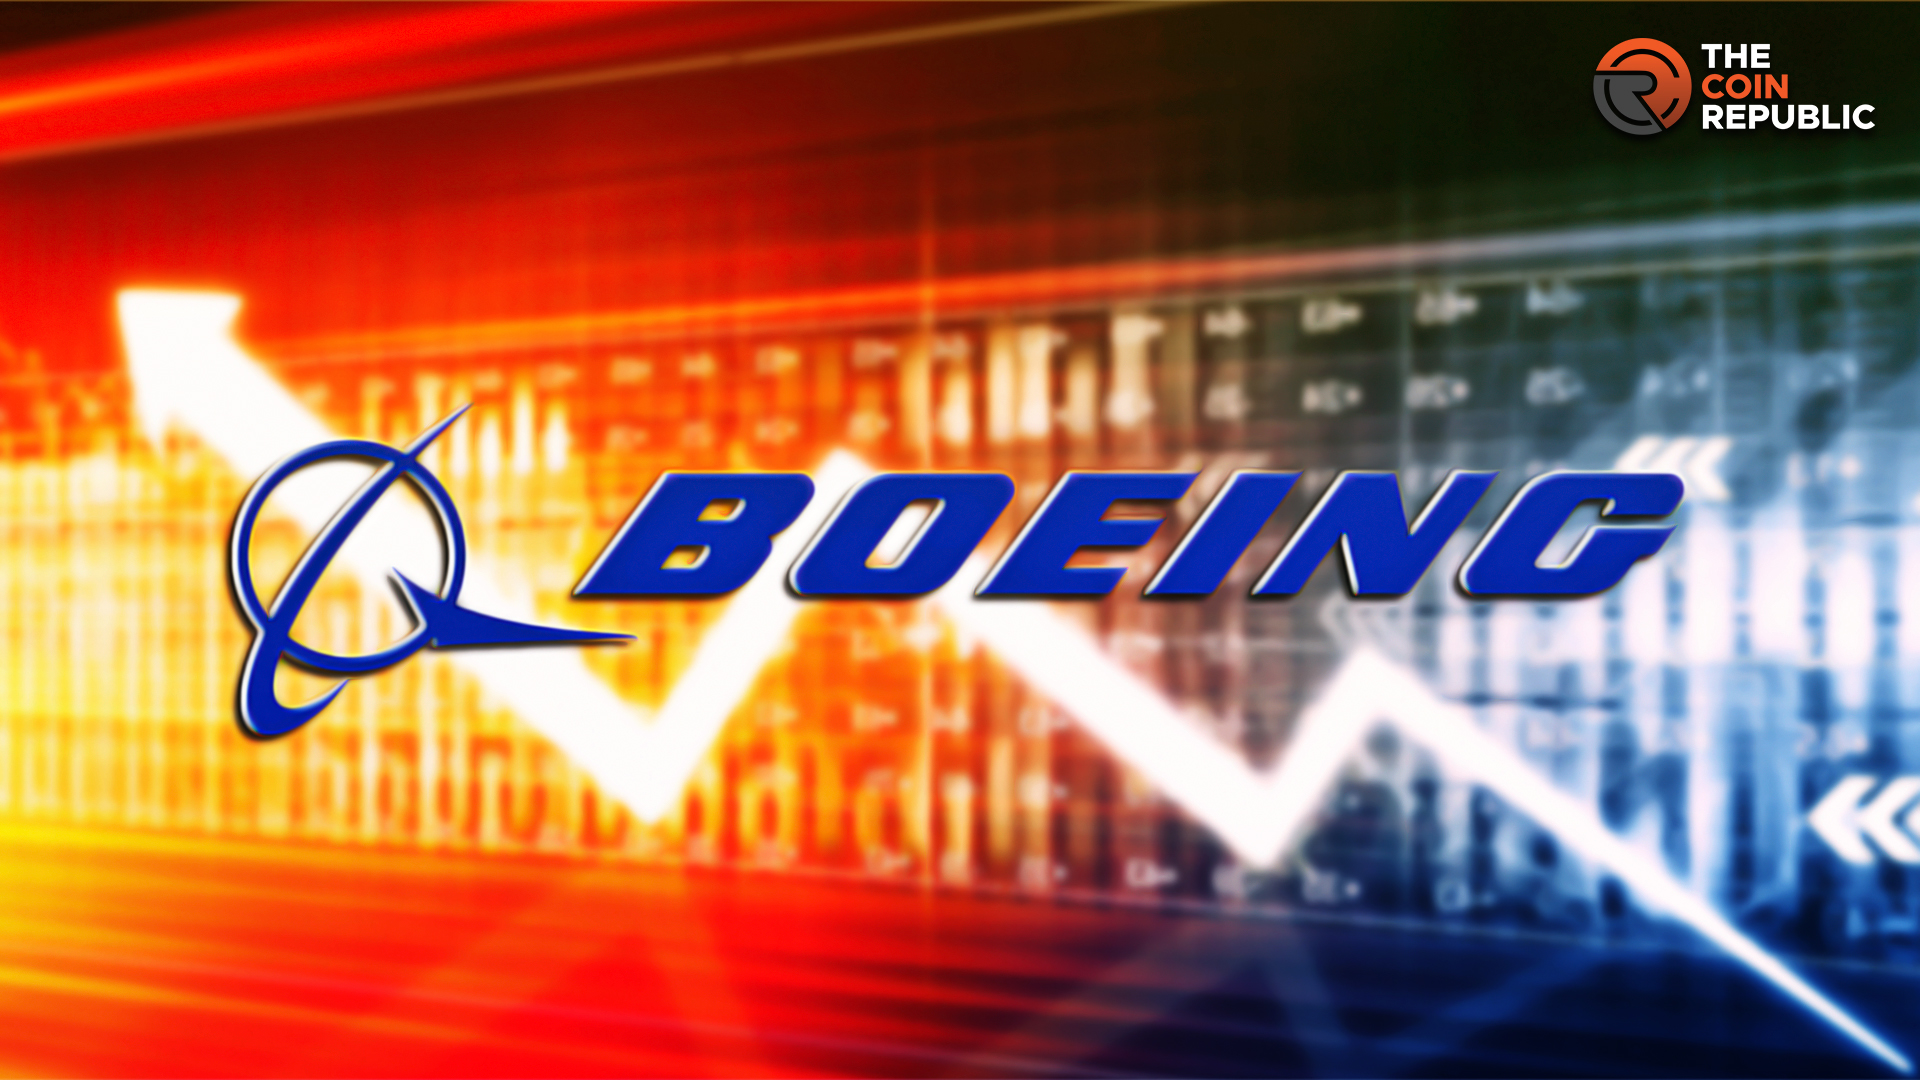 Boeing Stock Price Prediction: Will Starliner News Boost BA?